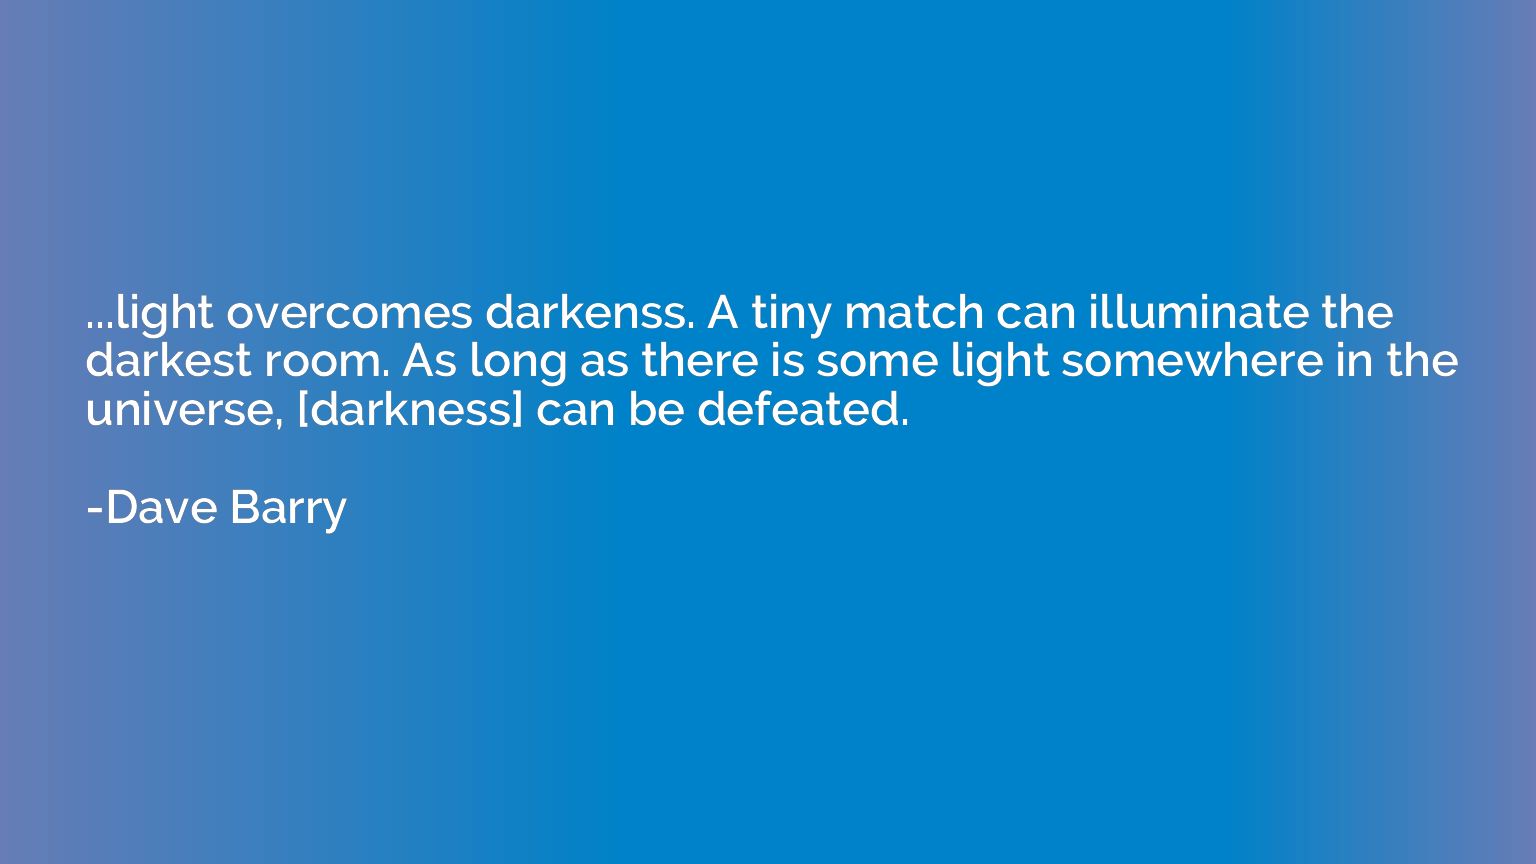 ...light overcomes darkenss. A tiny match can illuminate the